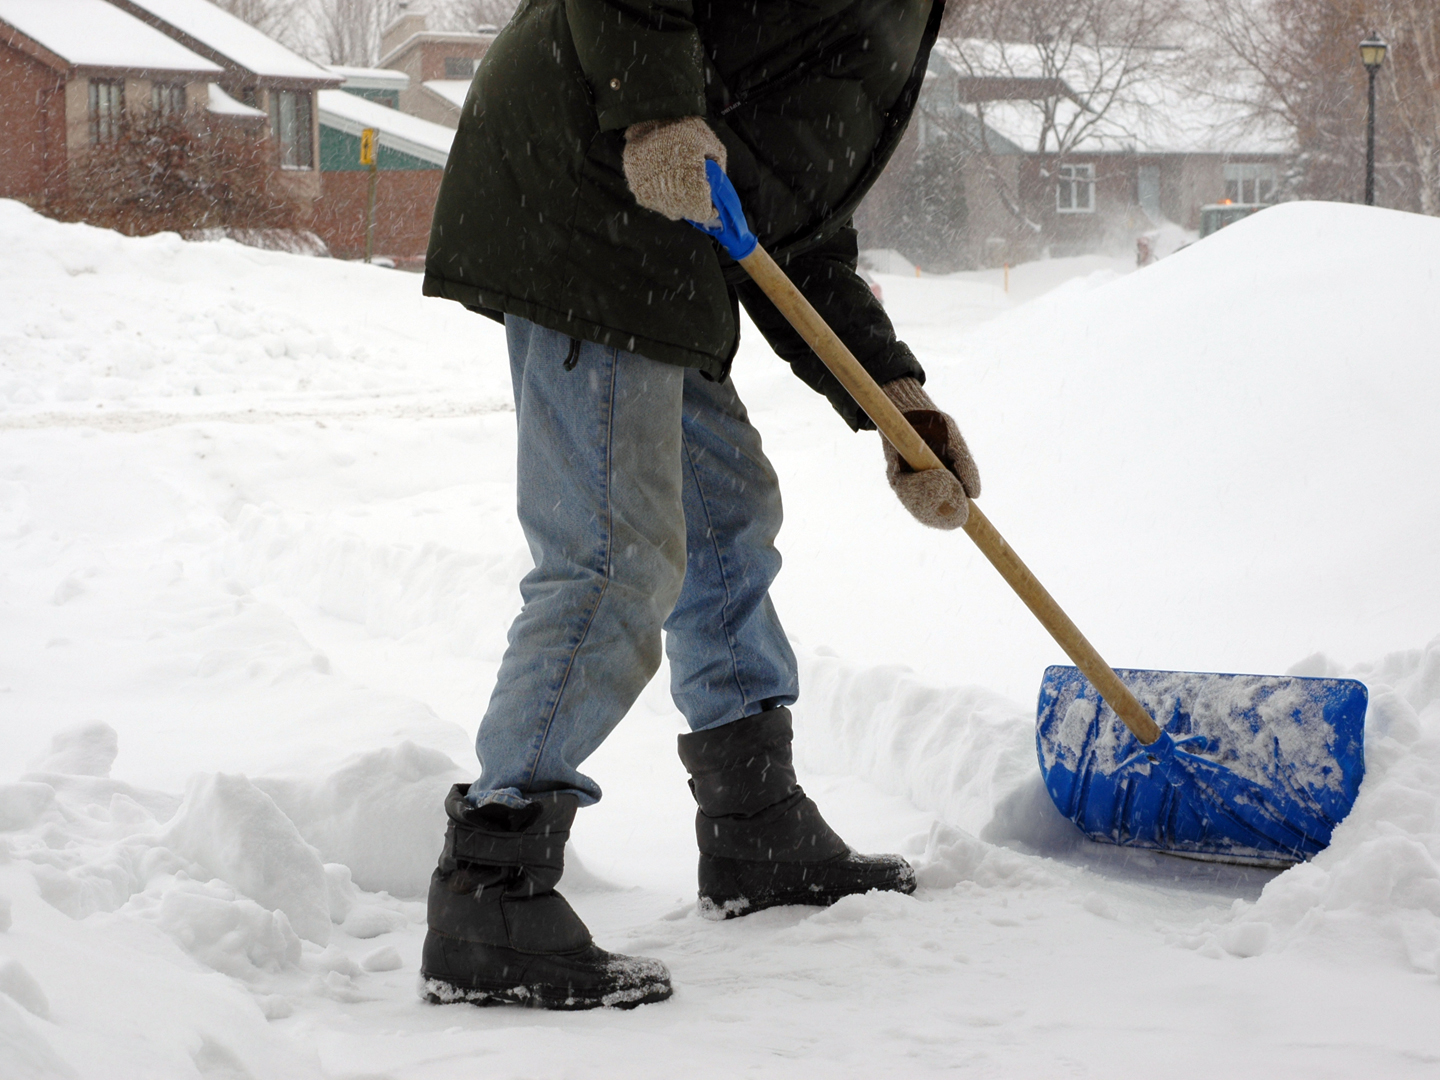 Man shoveling snow. Winter morning - Canada